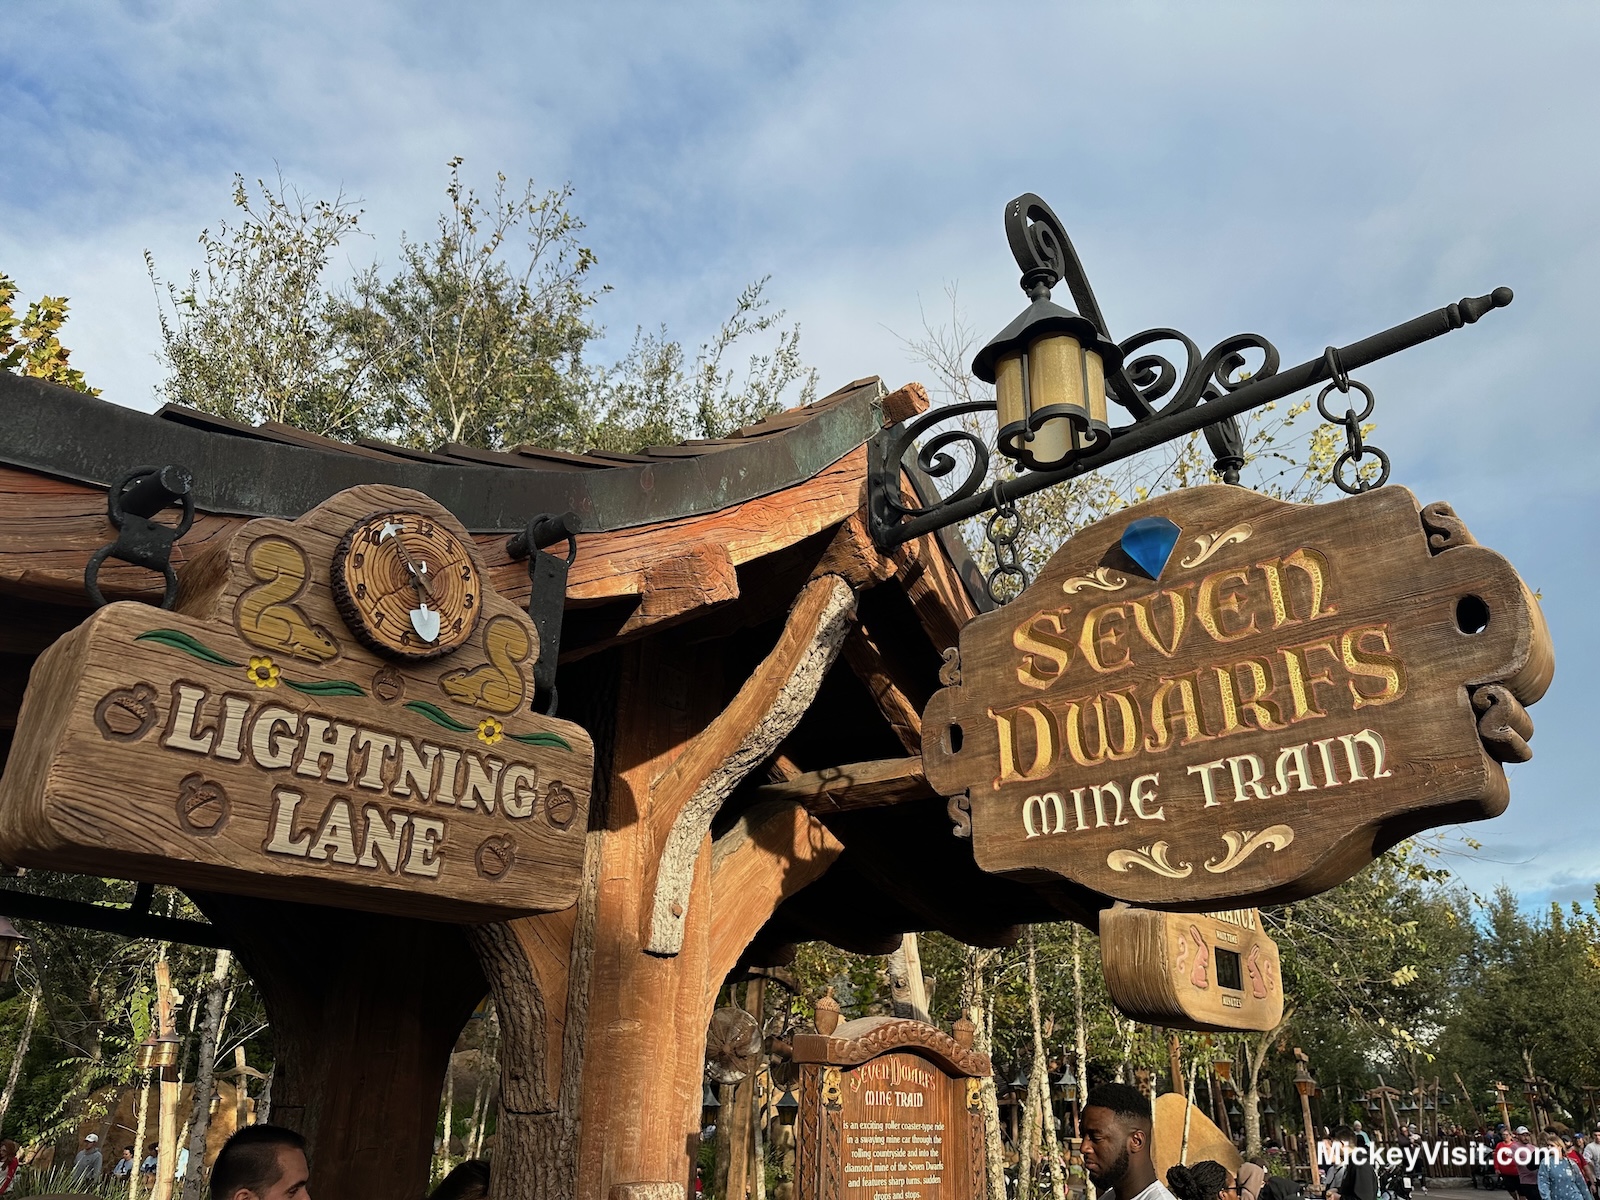 Disney World Lightning Lane